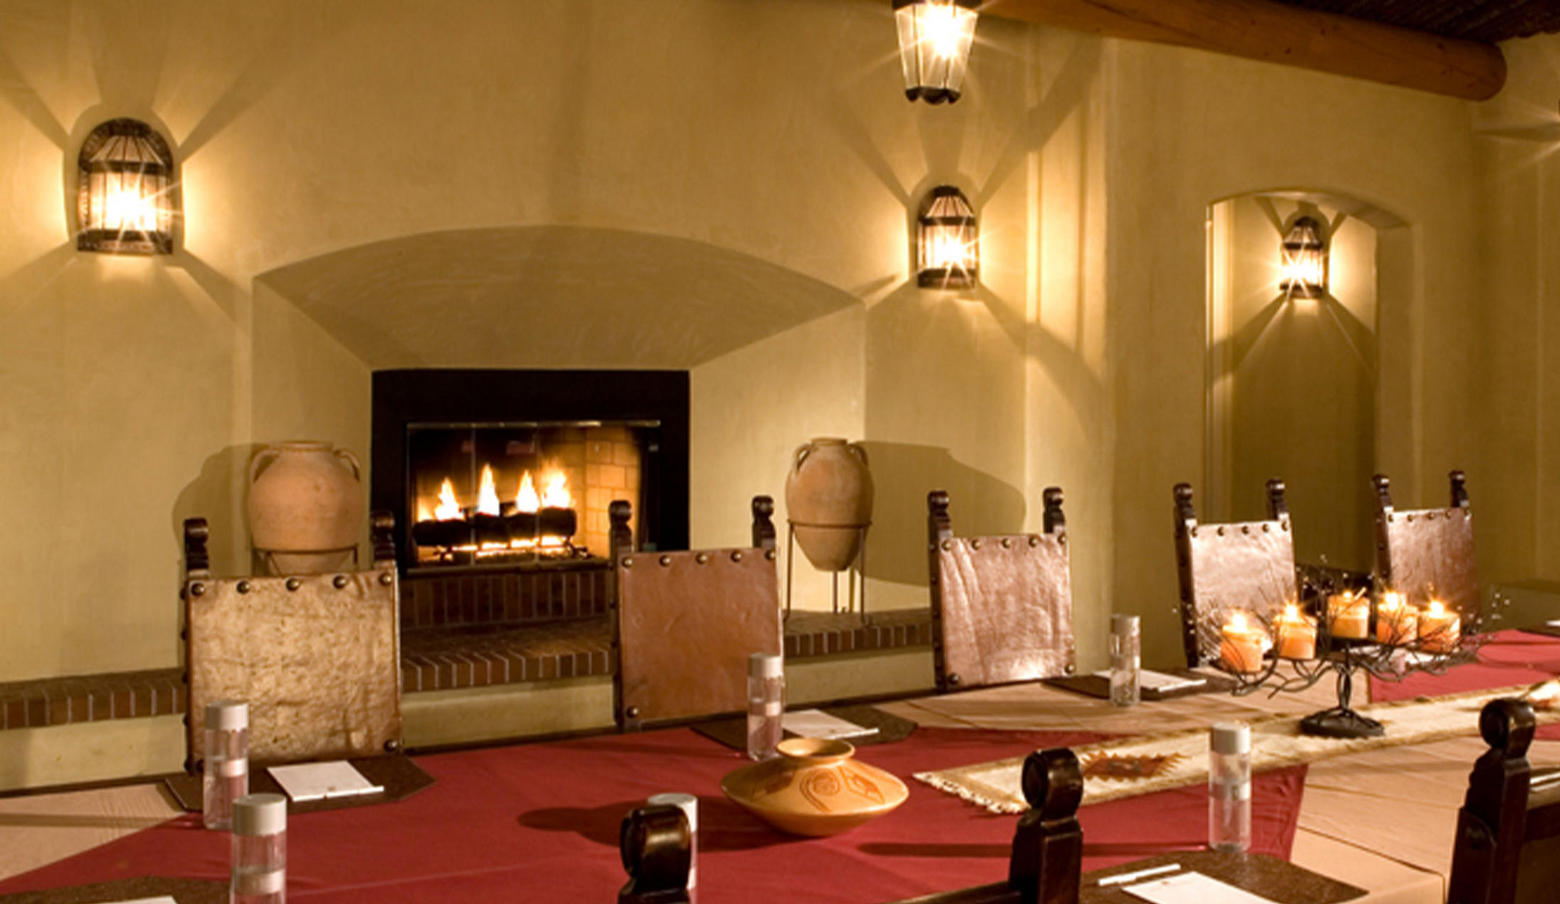 Fireplace Room